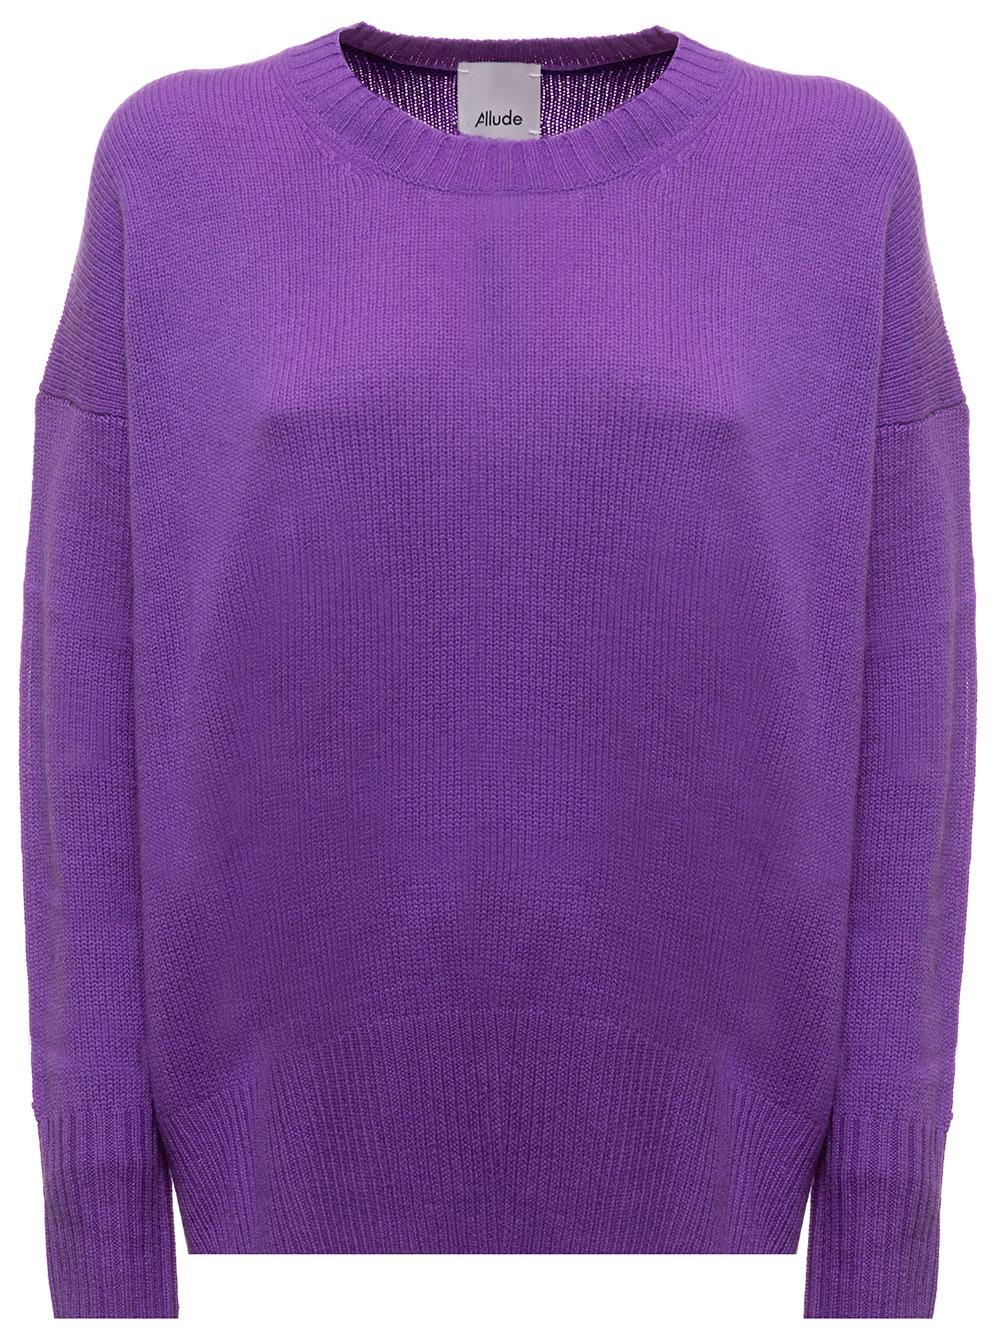 Cashmere Purple Sweater Allude Woman